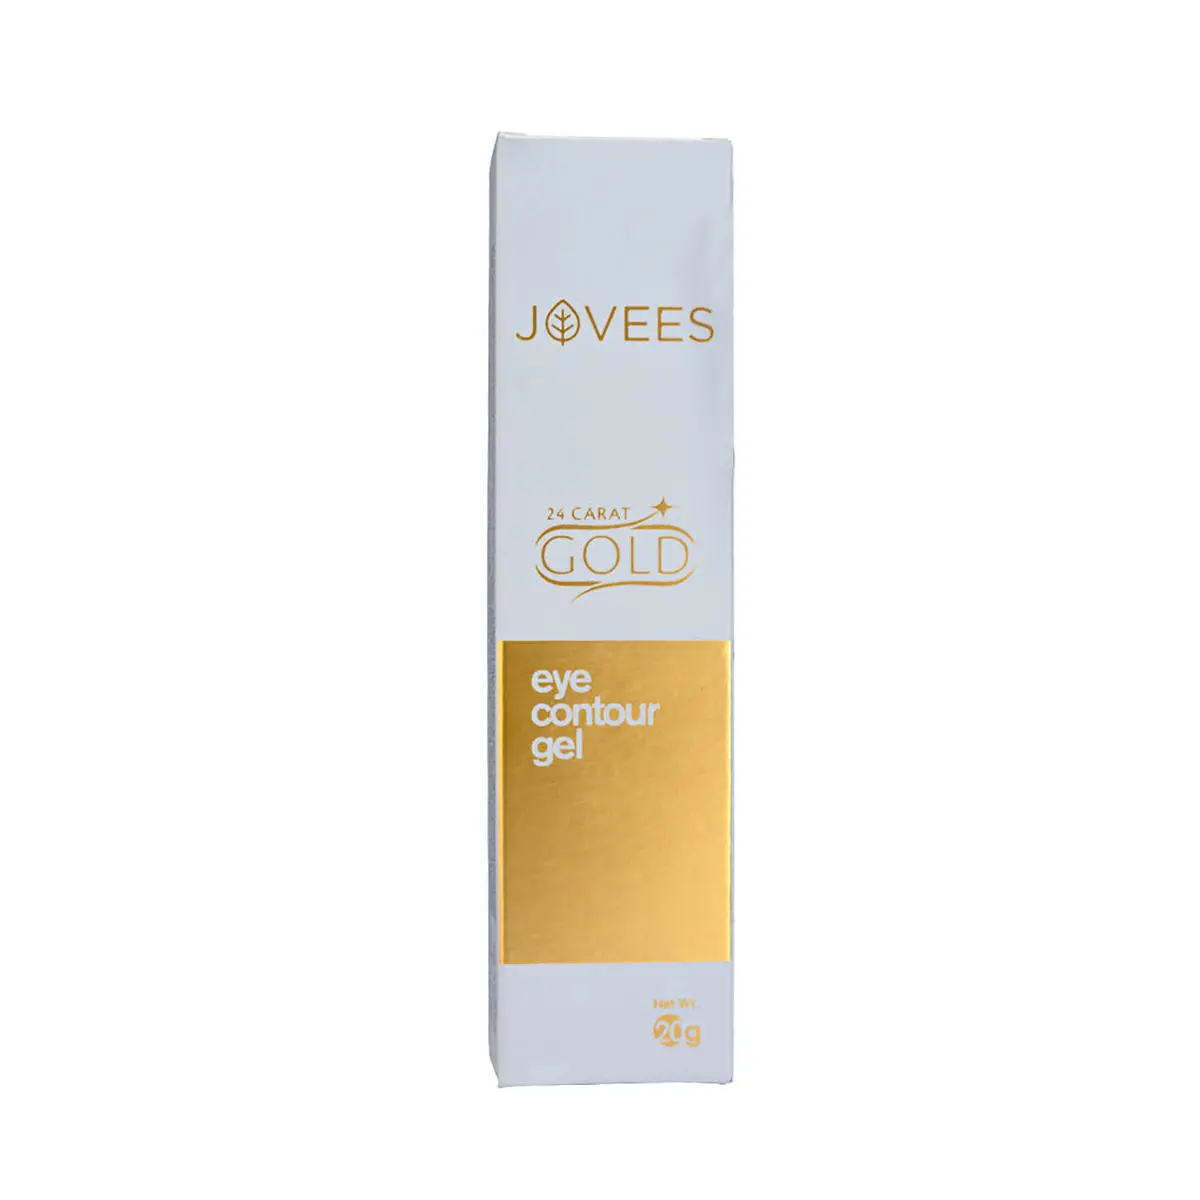 Jovees Herbal 24 Carat Gold Eye Contour Gel | 20g